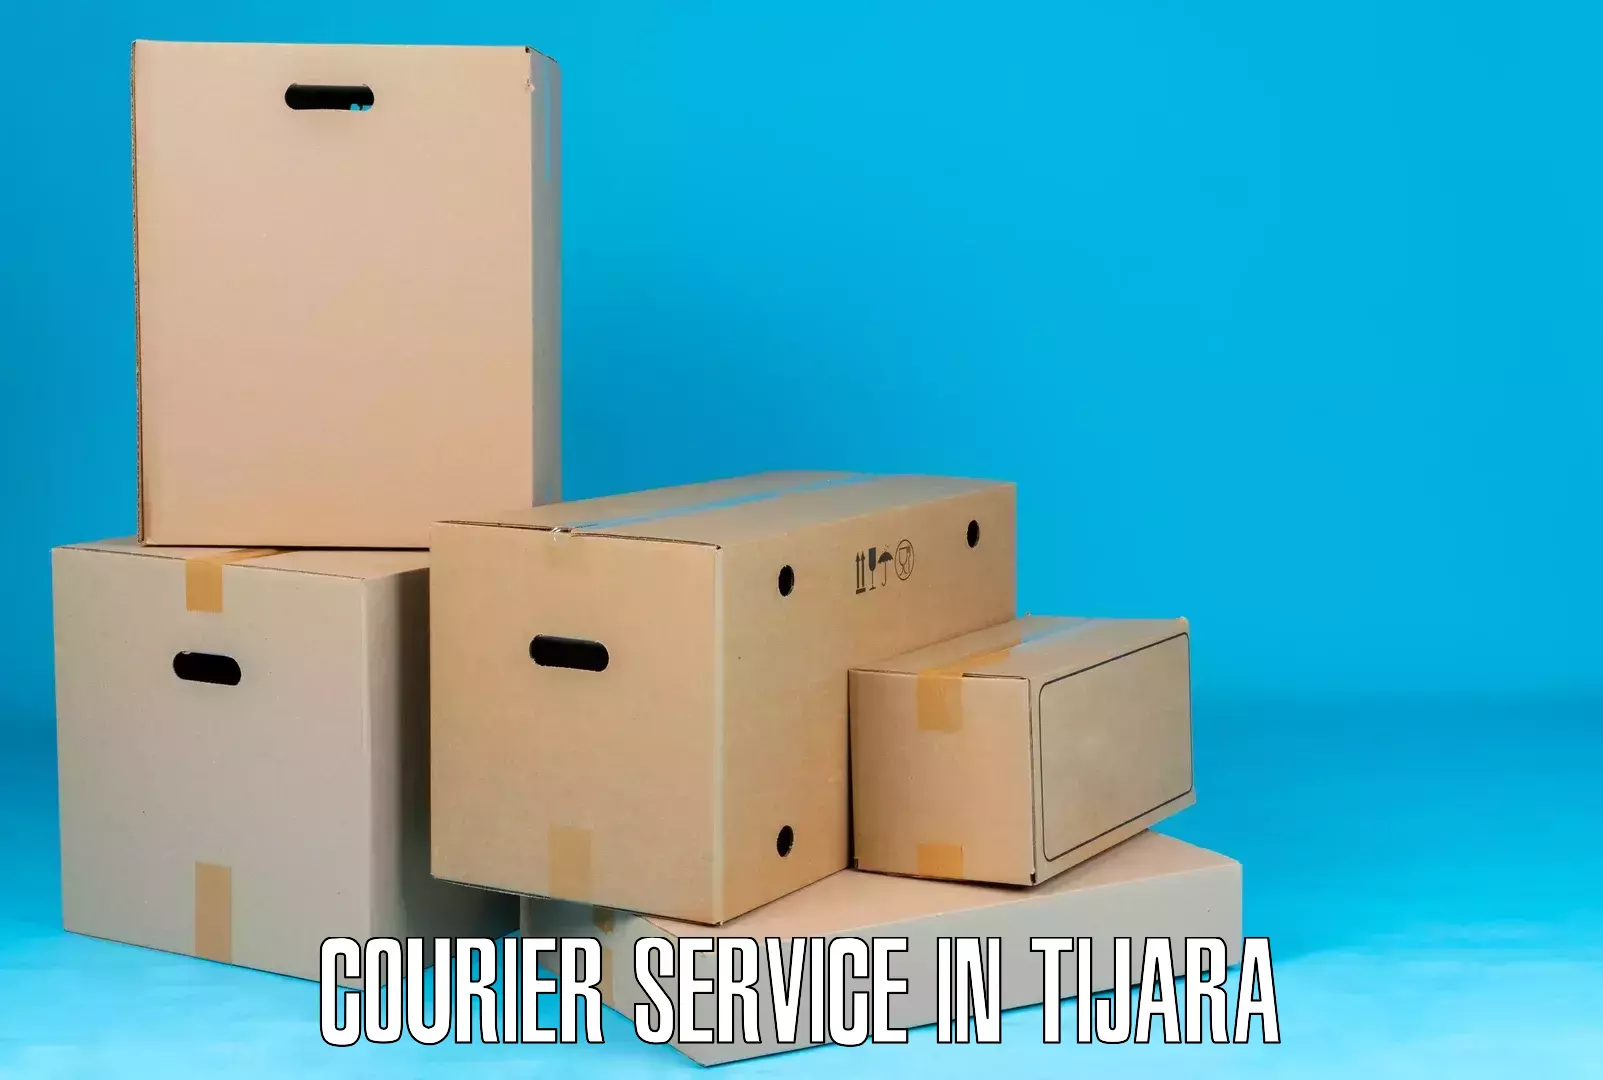 Holiday shipping services in Tijara